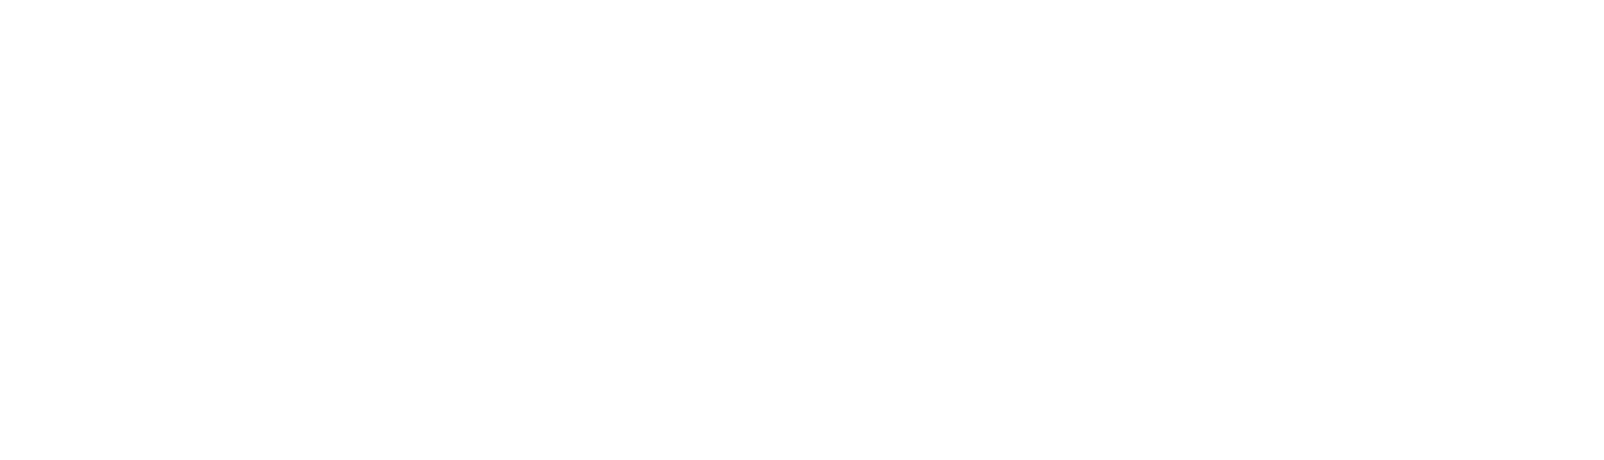 Marvell Technology Group Logo groß für dunkle Hintergründe (transparentes PNG)